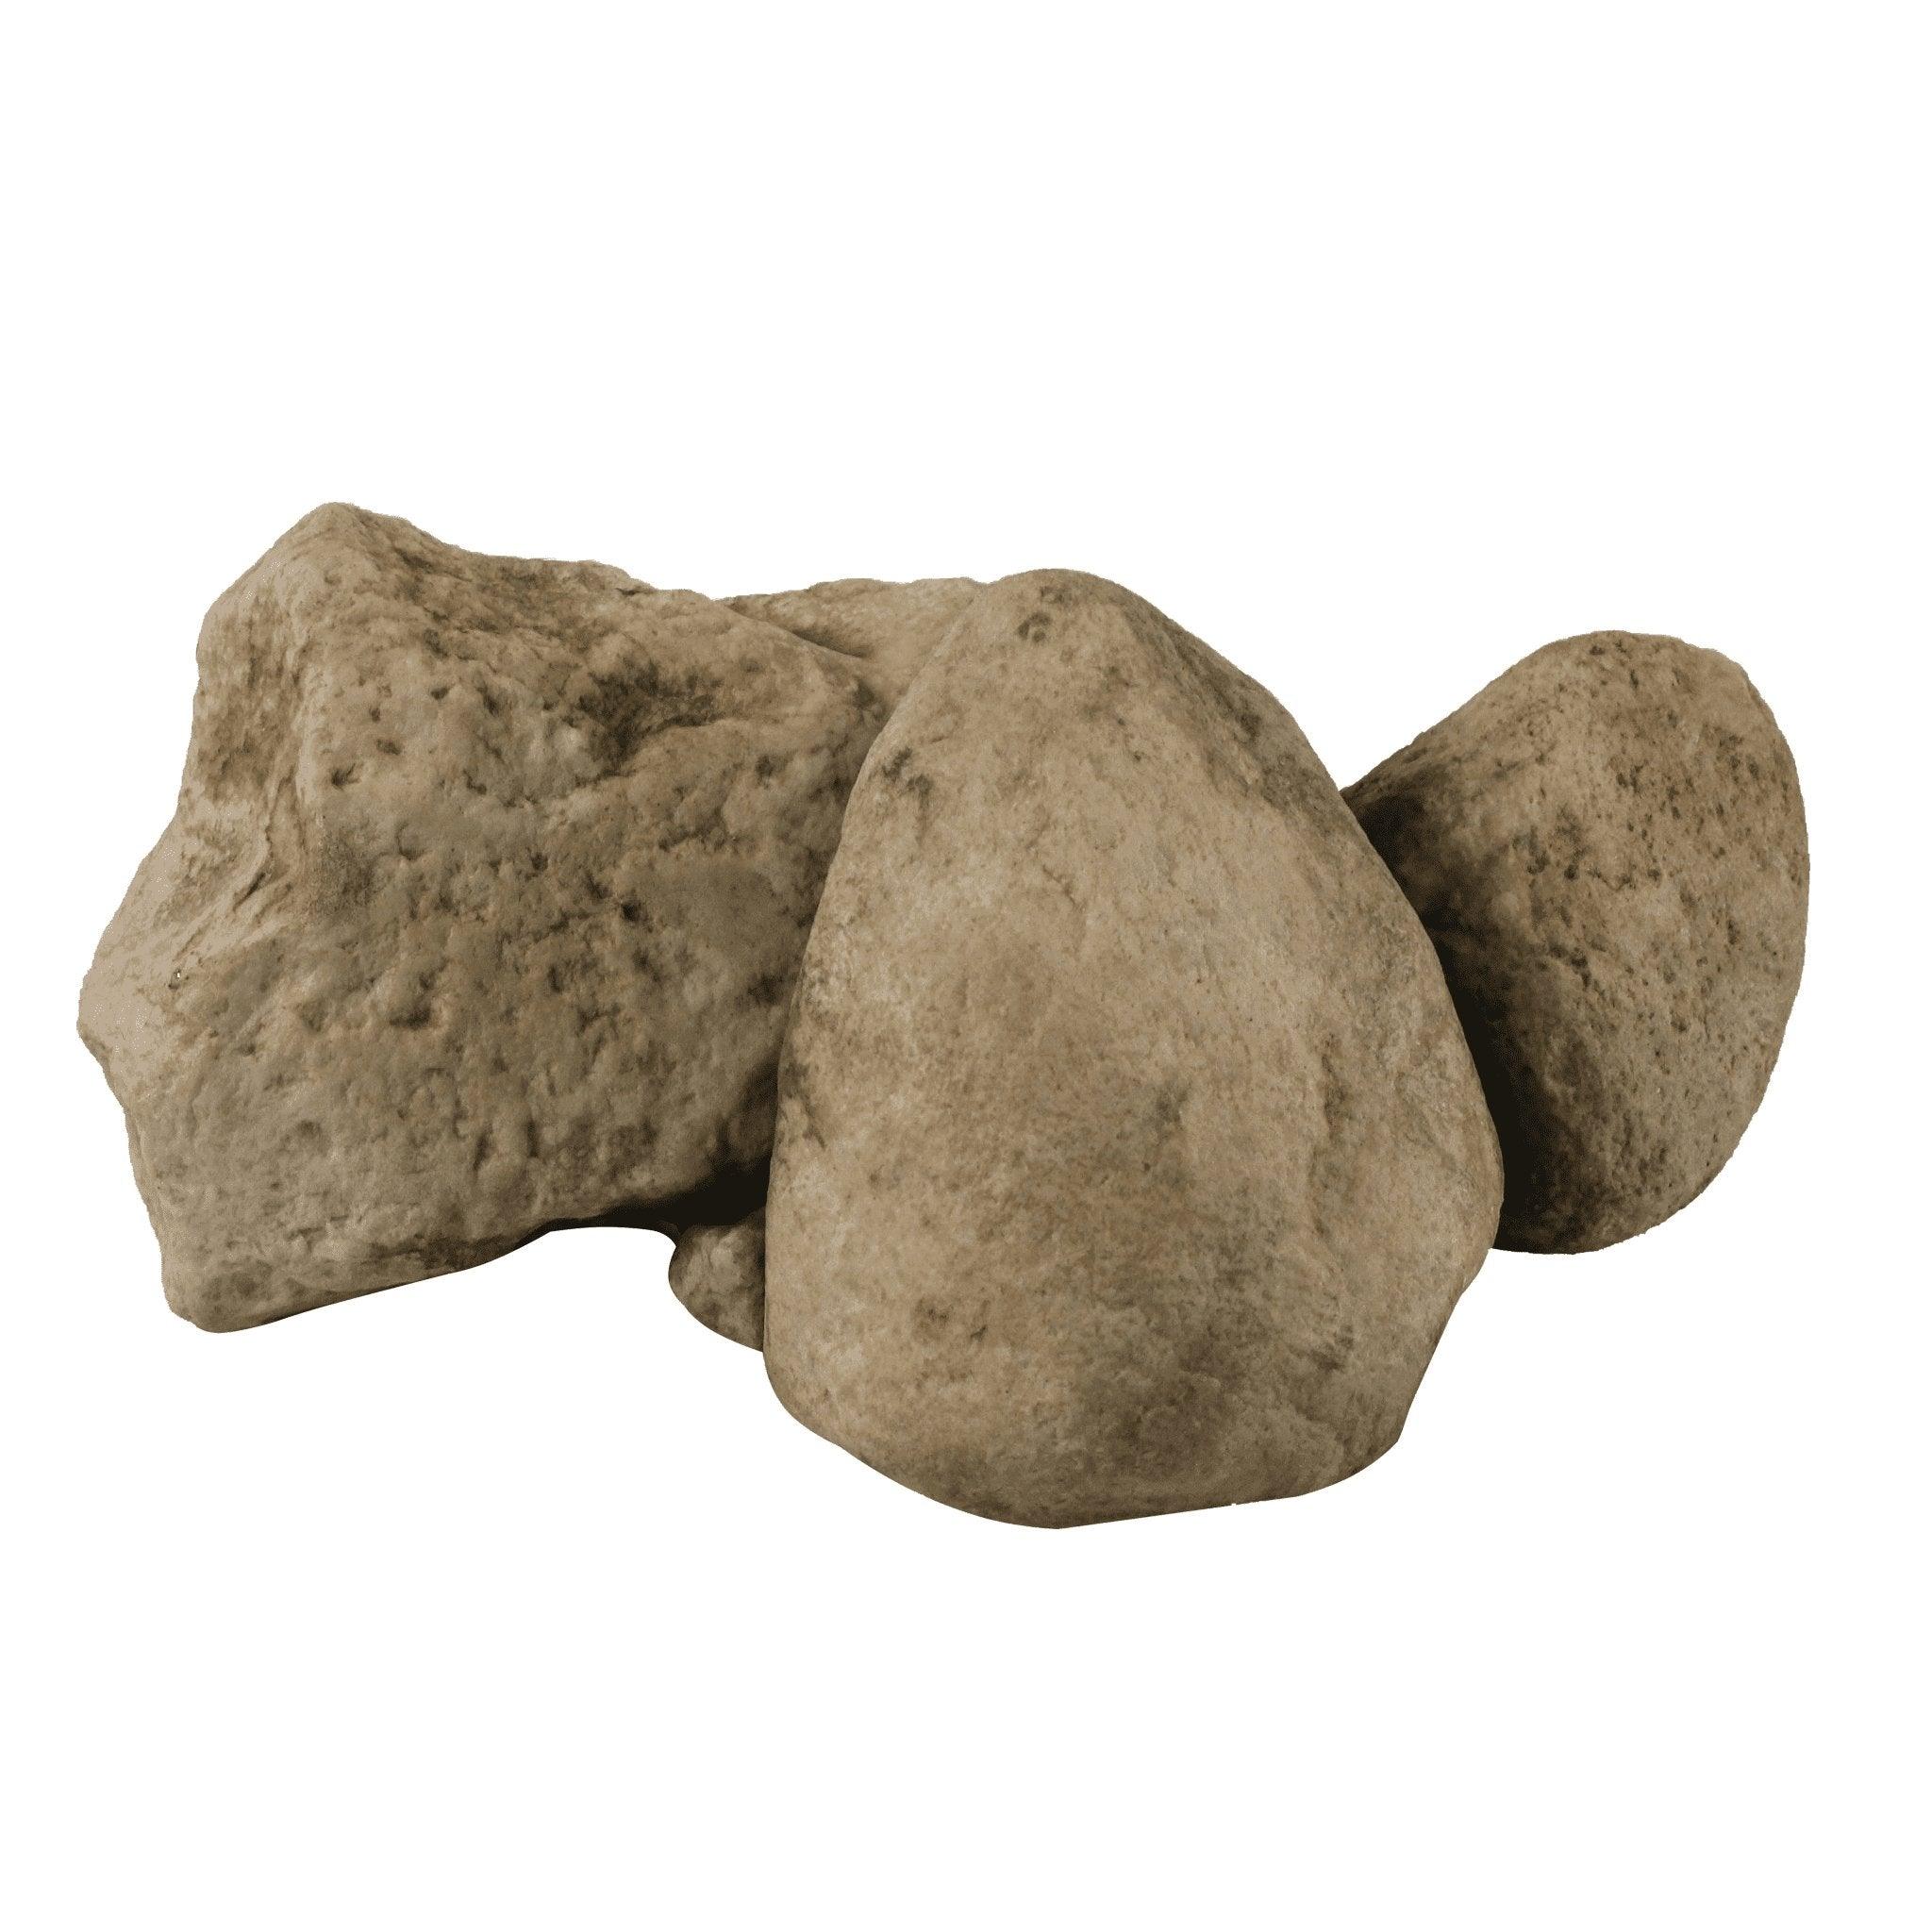 Artificial Rock Cluster (Large) - Matuska Taxidermy Supply Company